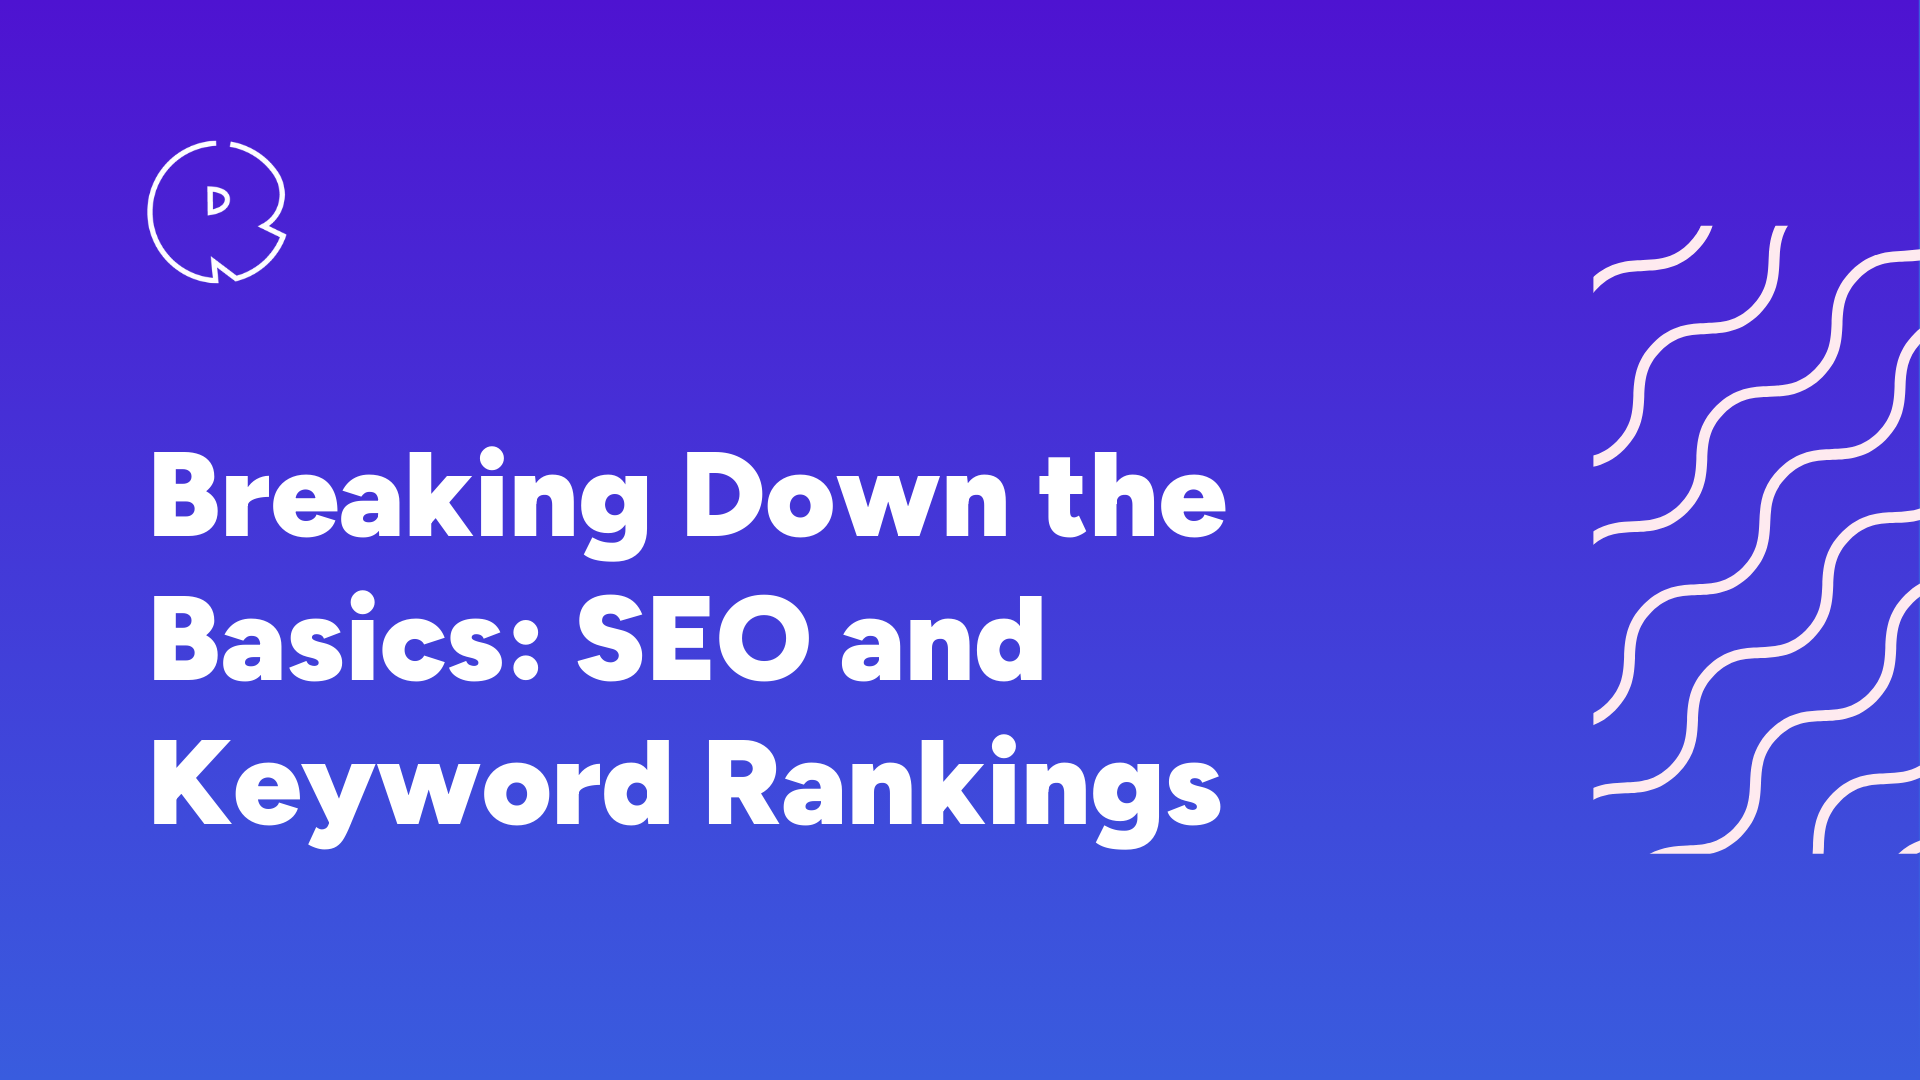 SEO and Keyword Rankings